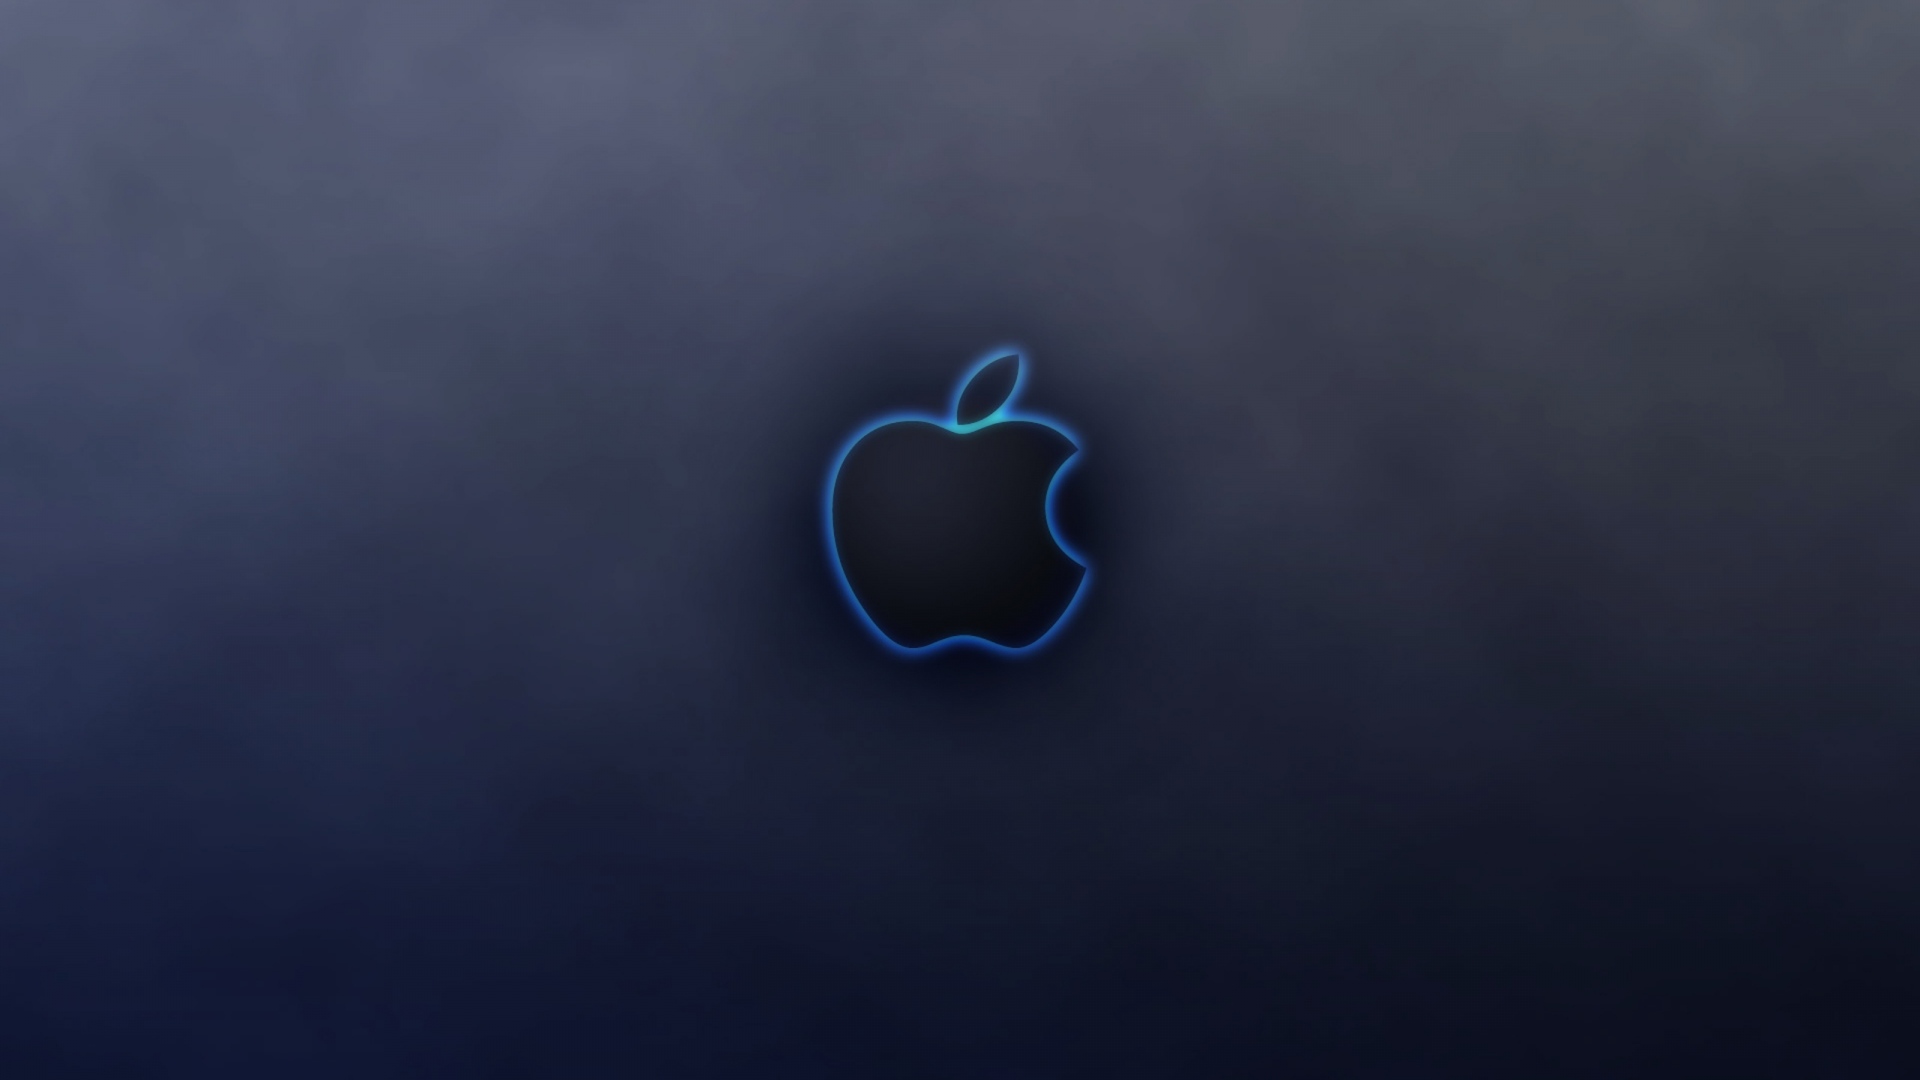 Free download Download Wallpaper 1920x1080 Apple Mac Black Logo Full ...